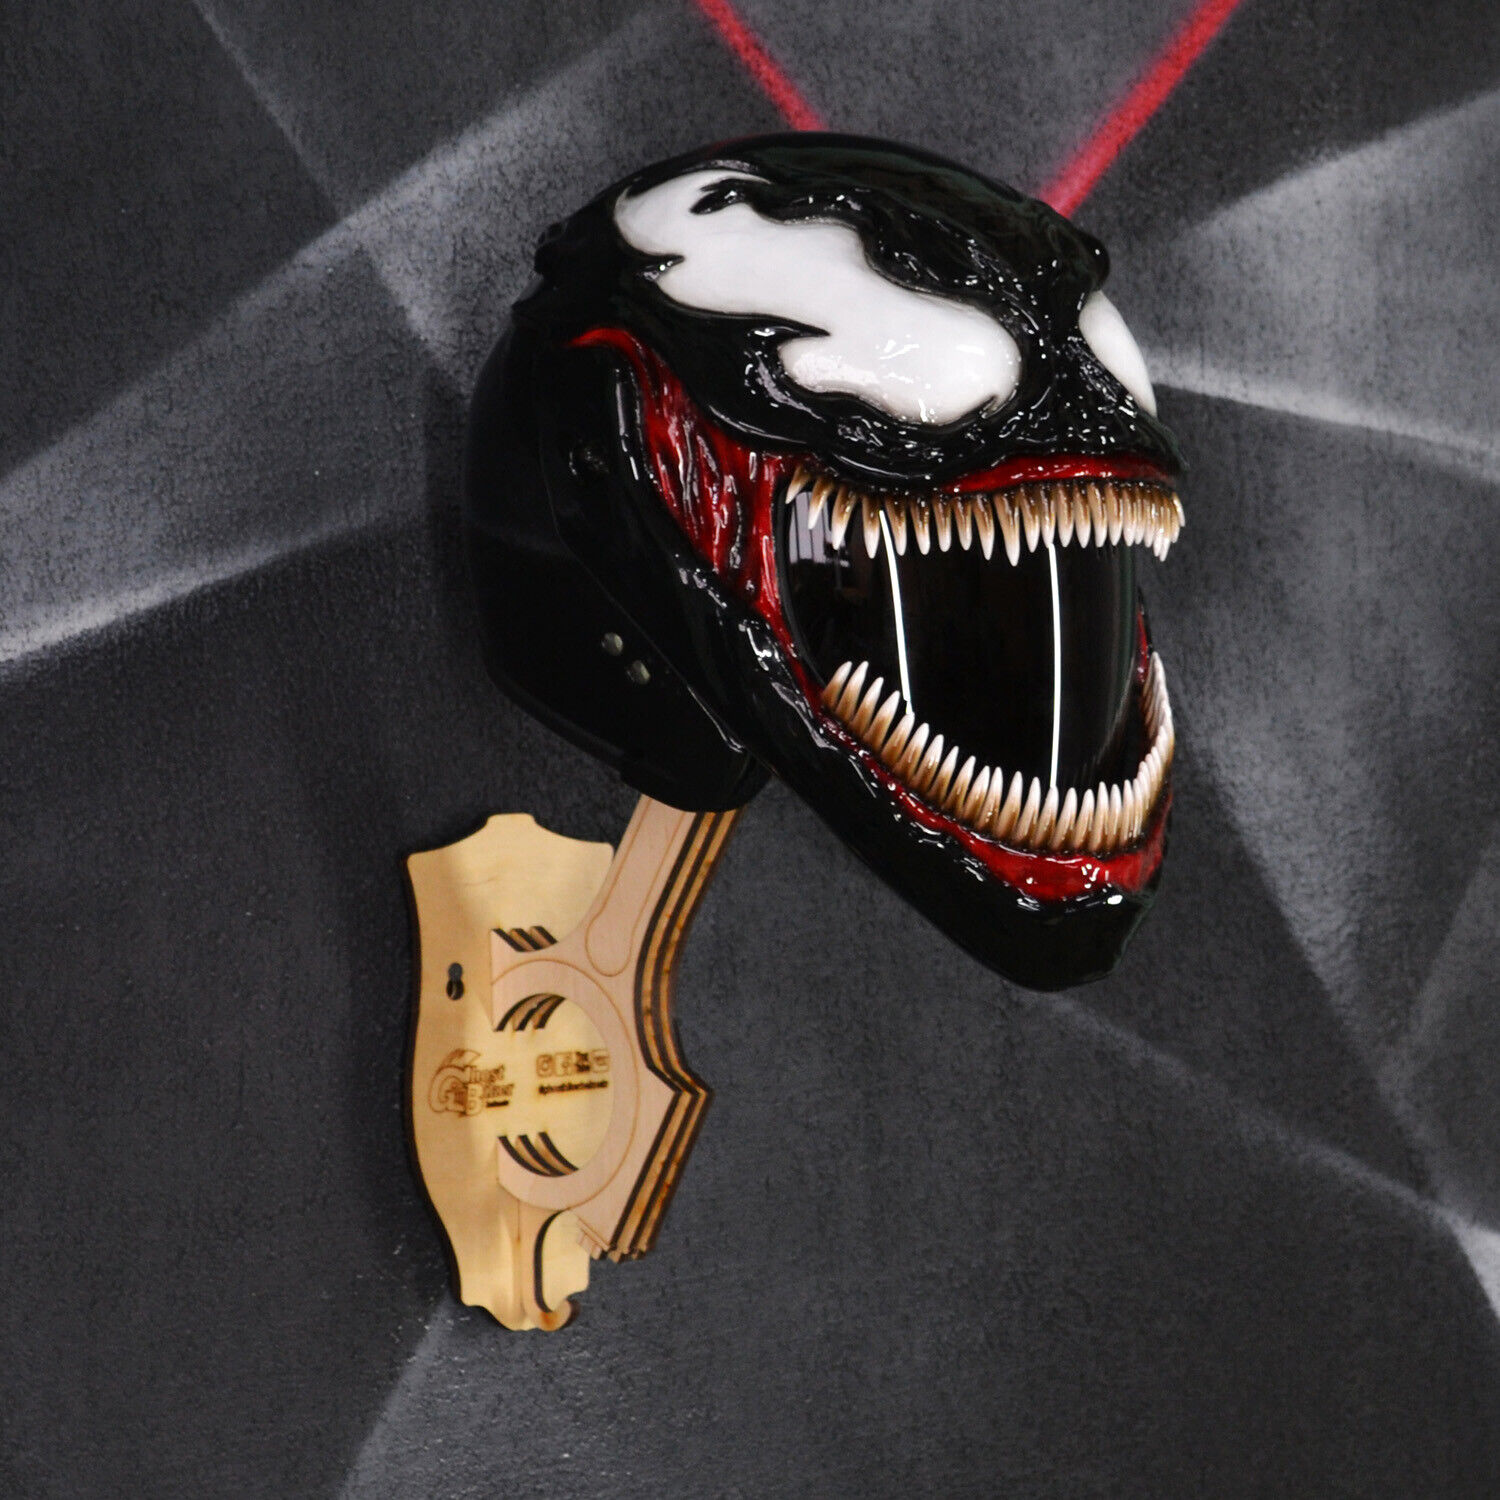 Venom (Symbiote) motorcycle helmet. DOT&ECE certified. 